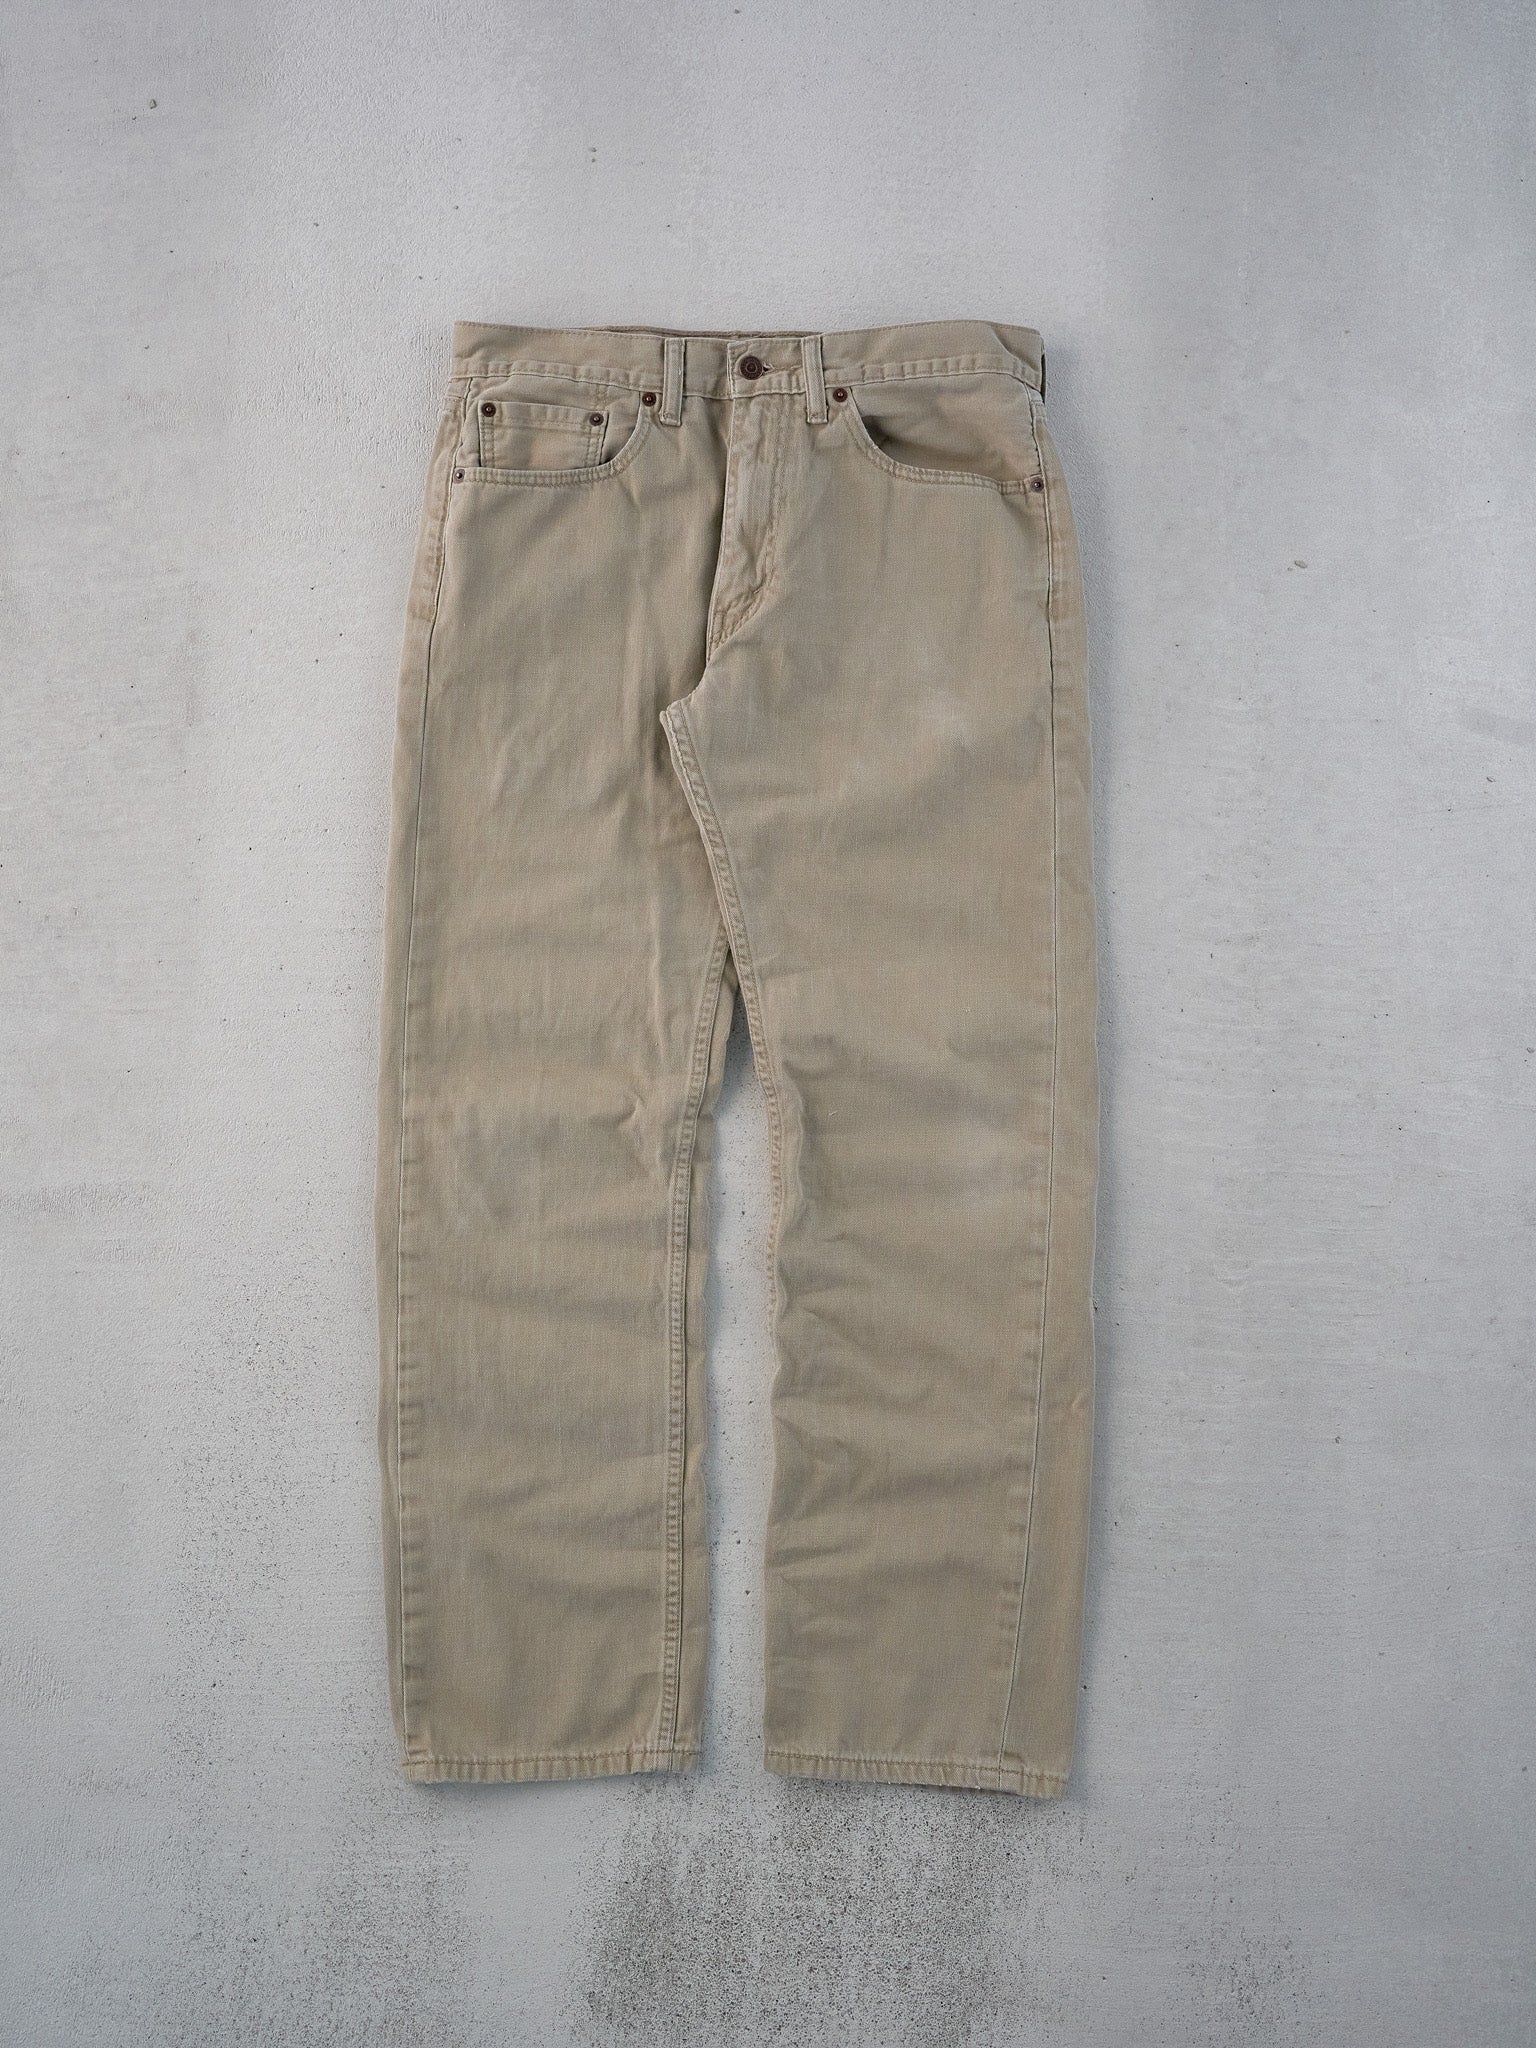 Vintage 90s Khaki Levi's 505 Denim Jeans (32x30)